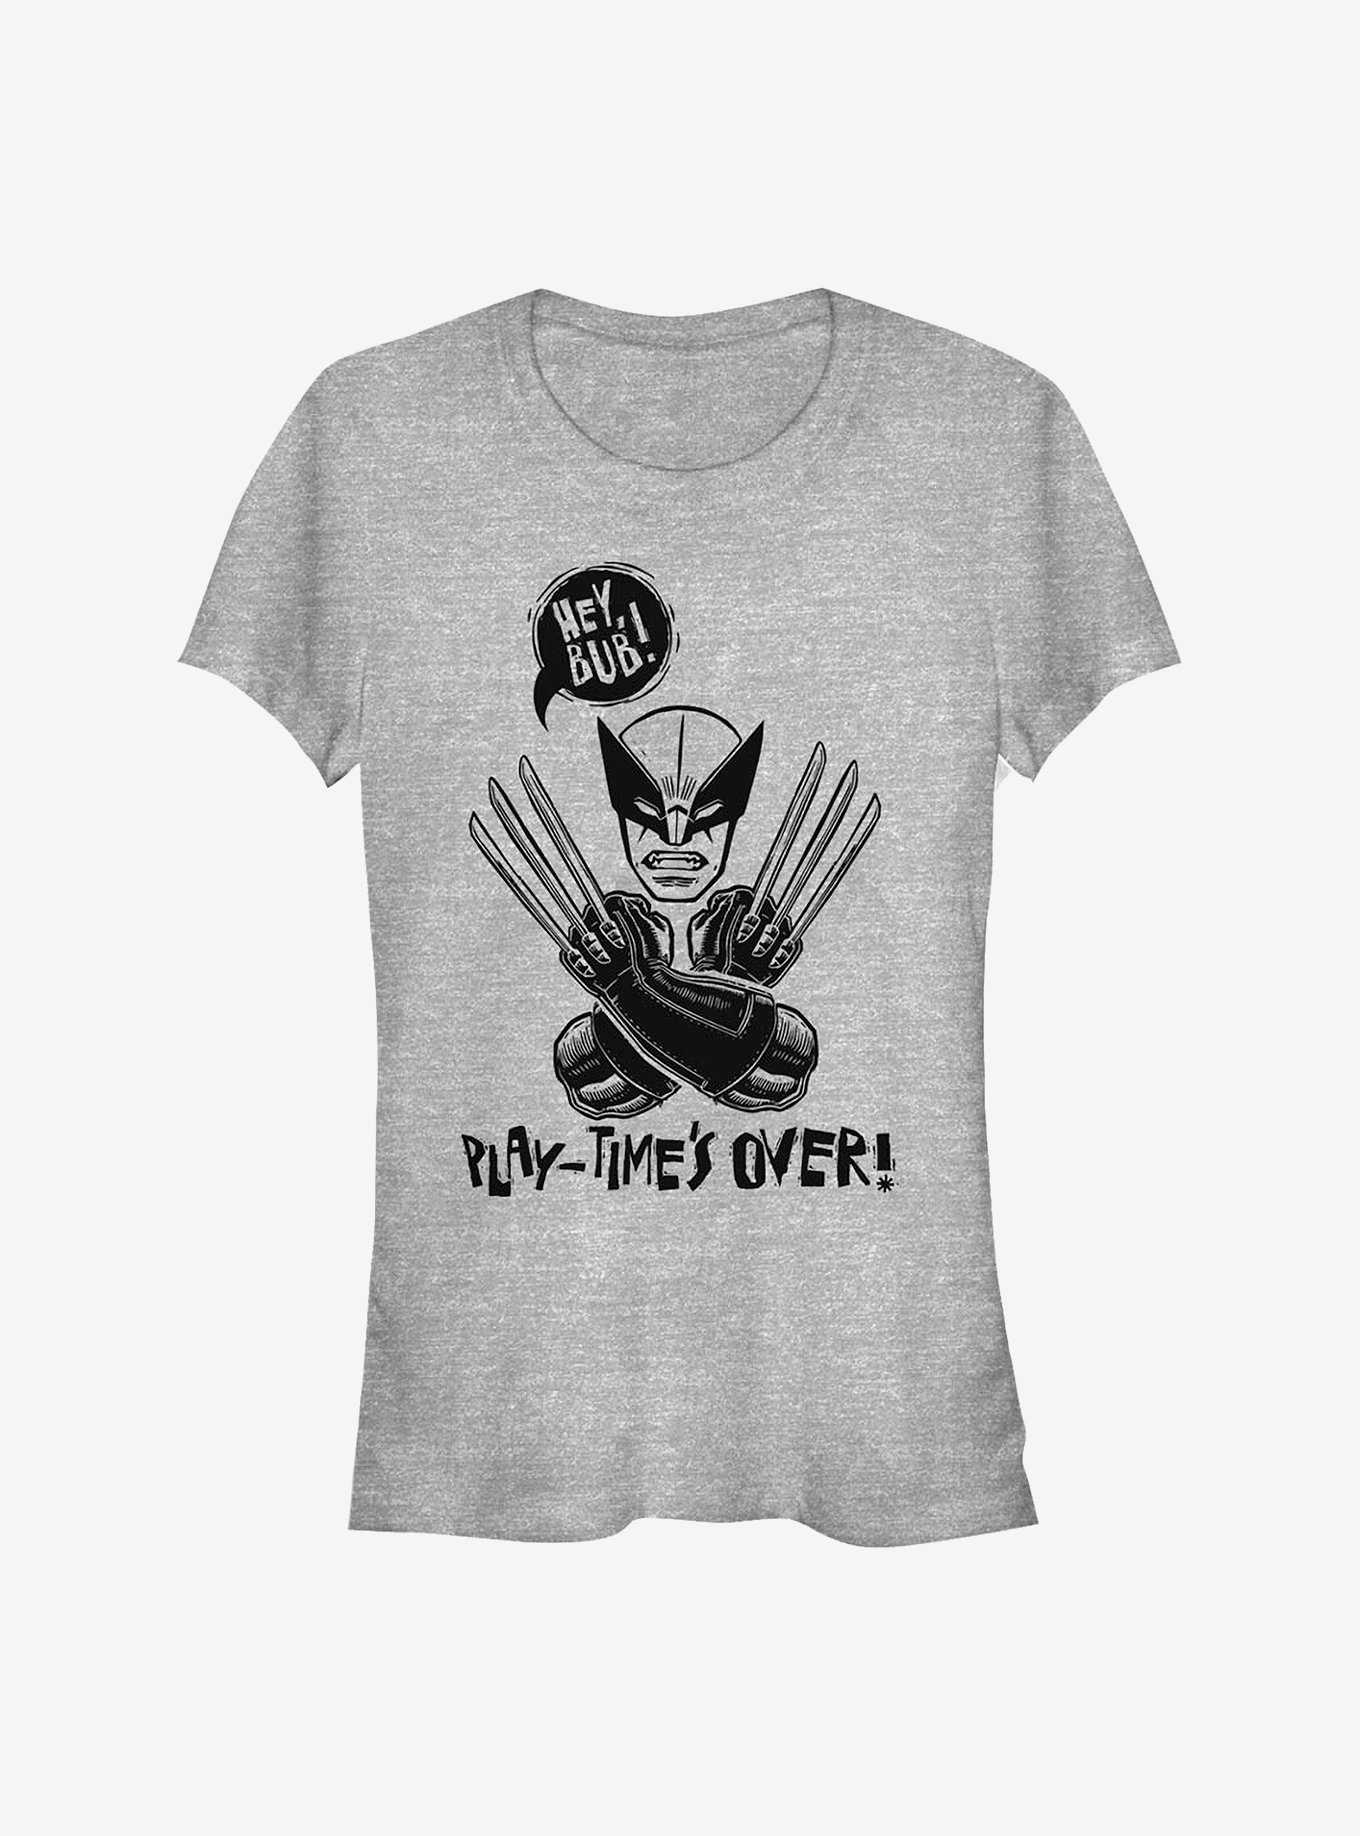 Marvel Wolverine Bub Girls T-Shirt, , hi-res